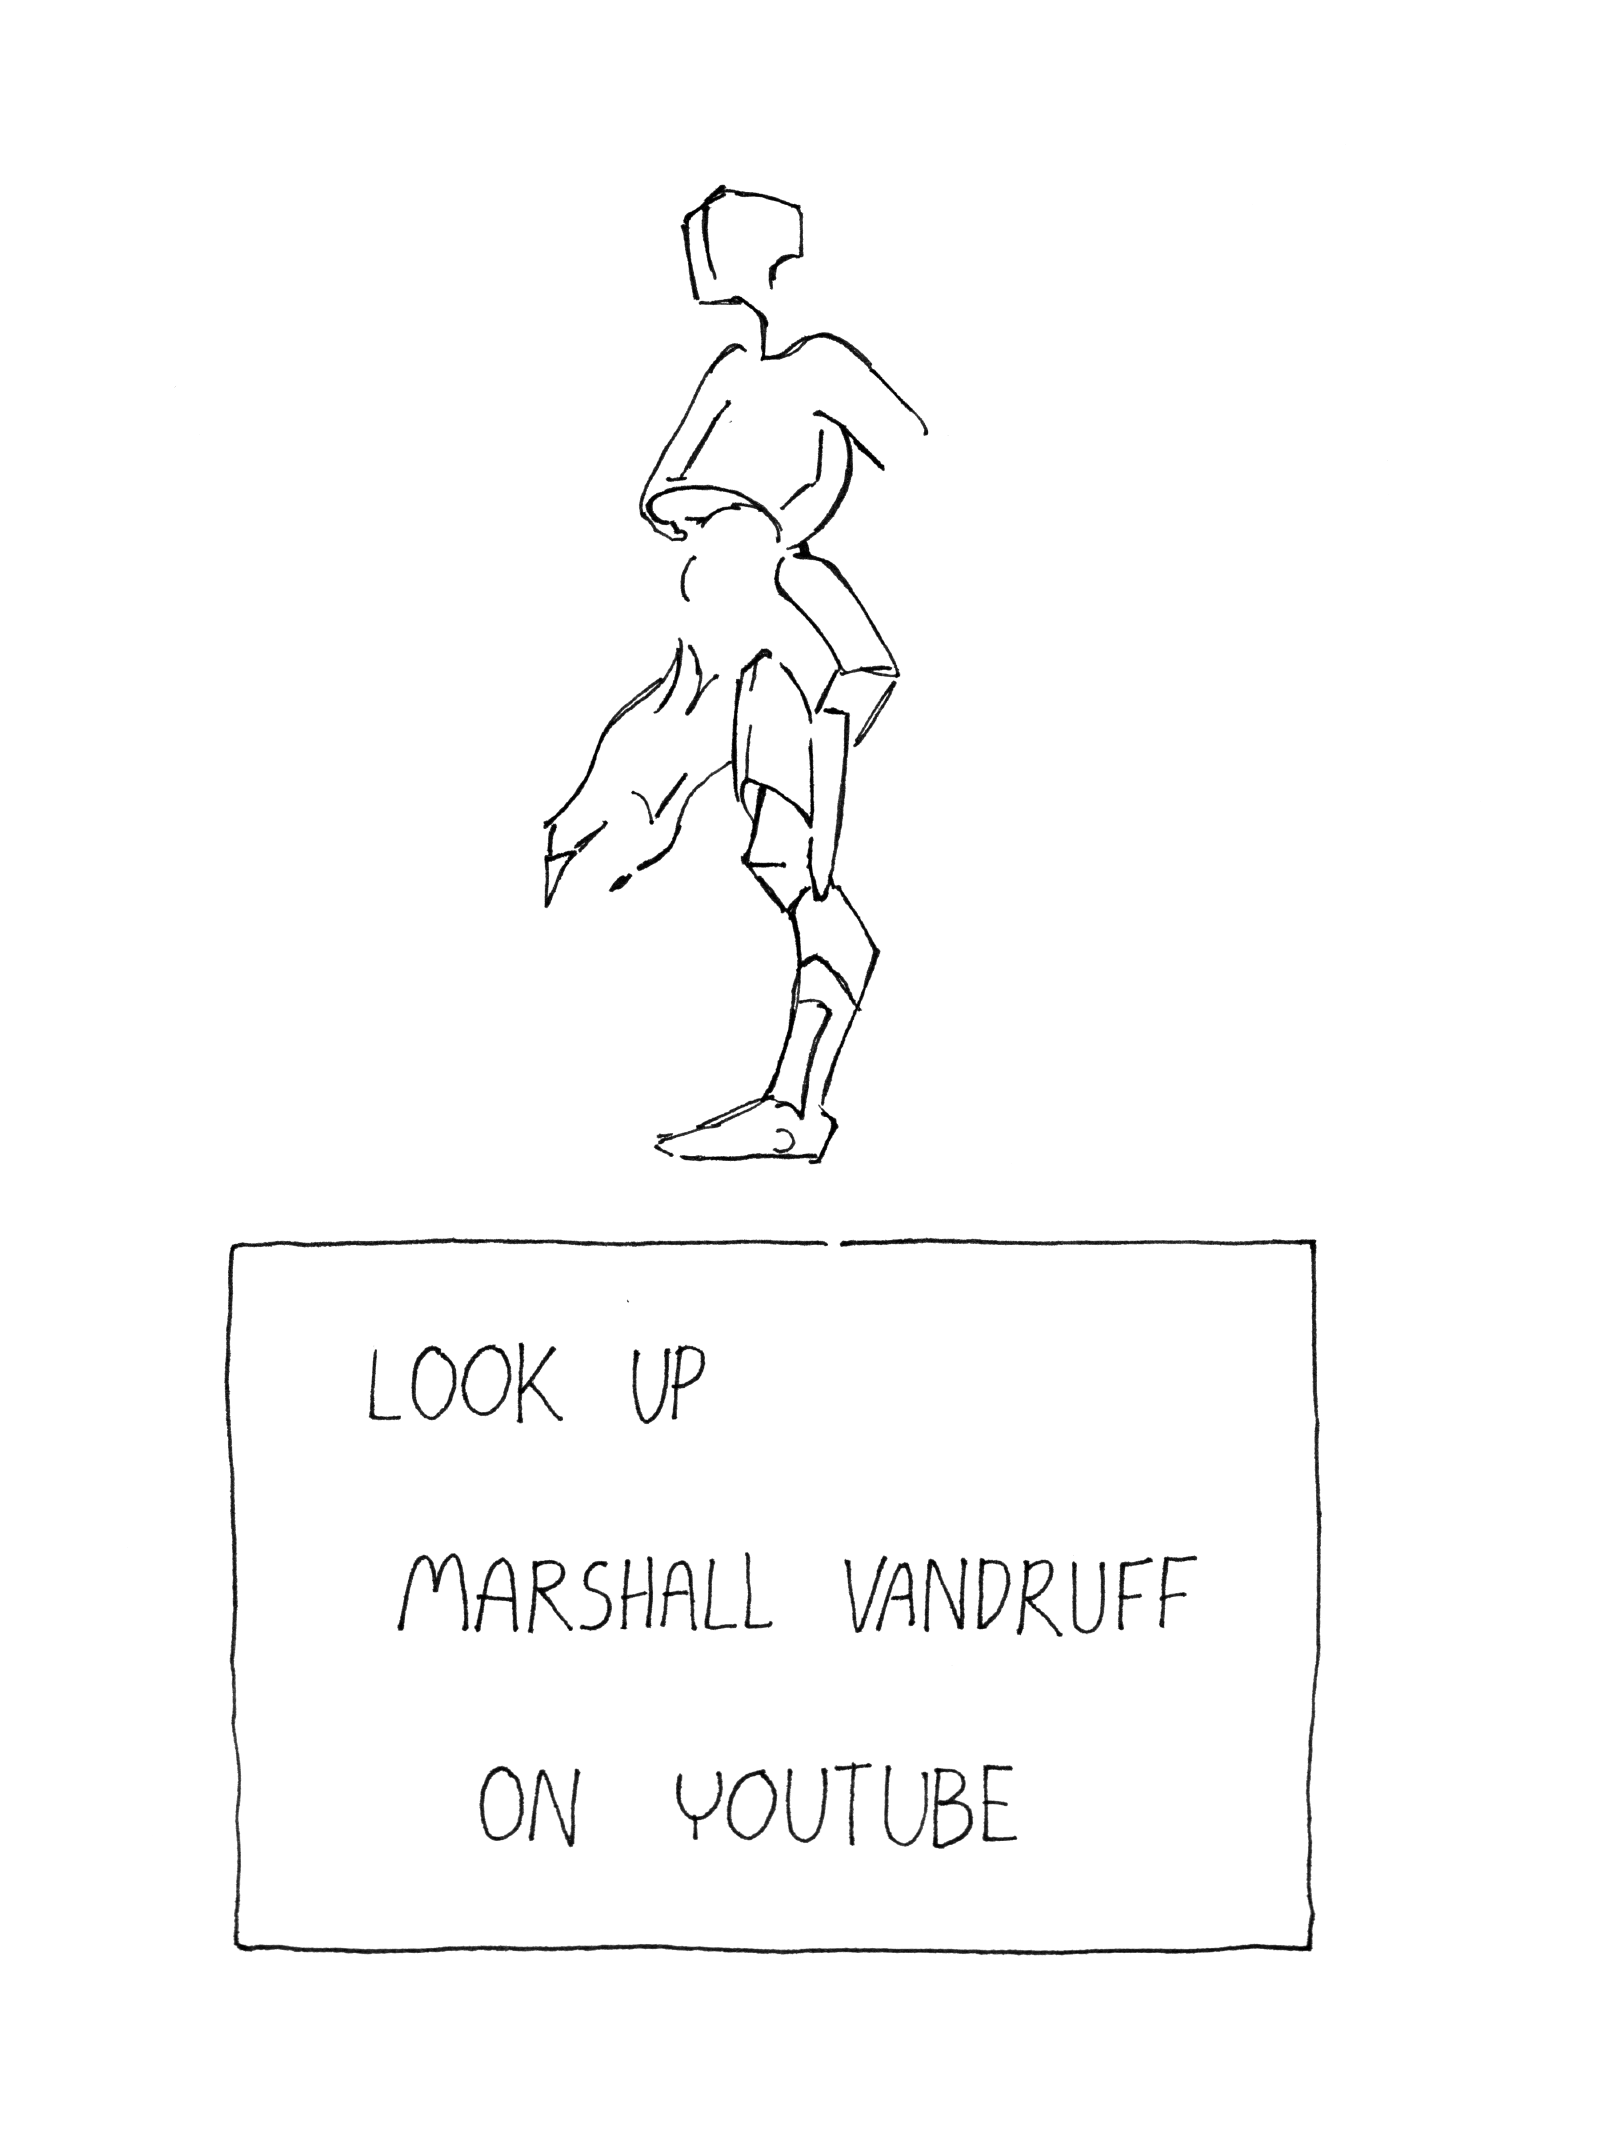 Look up Marshall Vandruff on YouTube